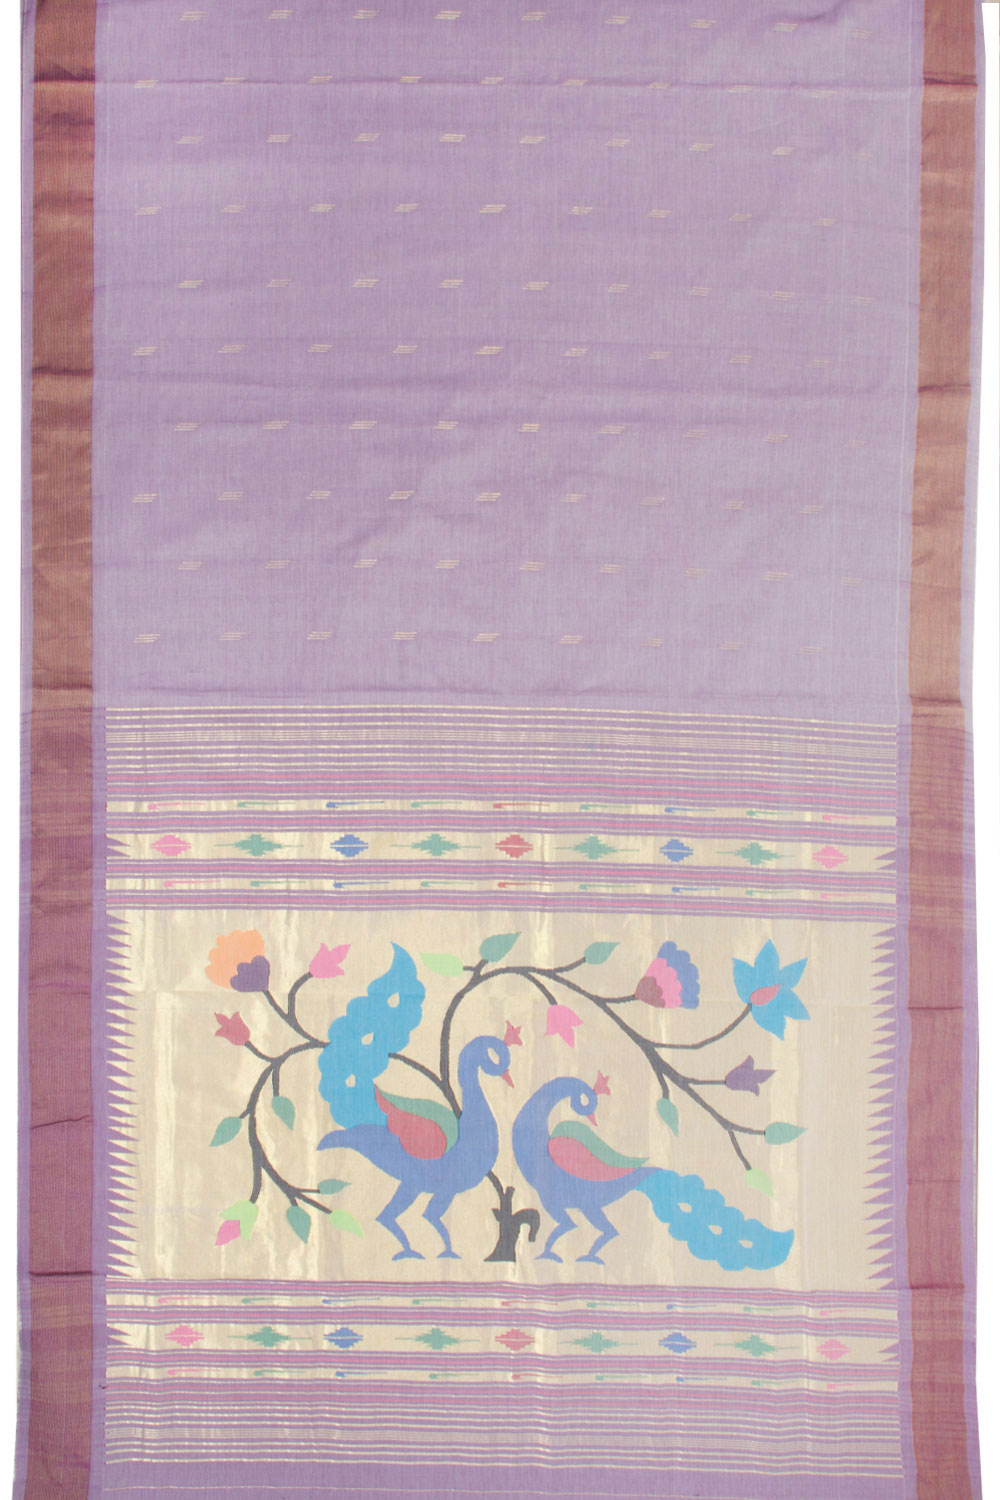 Violet Handloom Paithani Cotton Saree 10068430 - Avishya